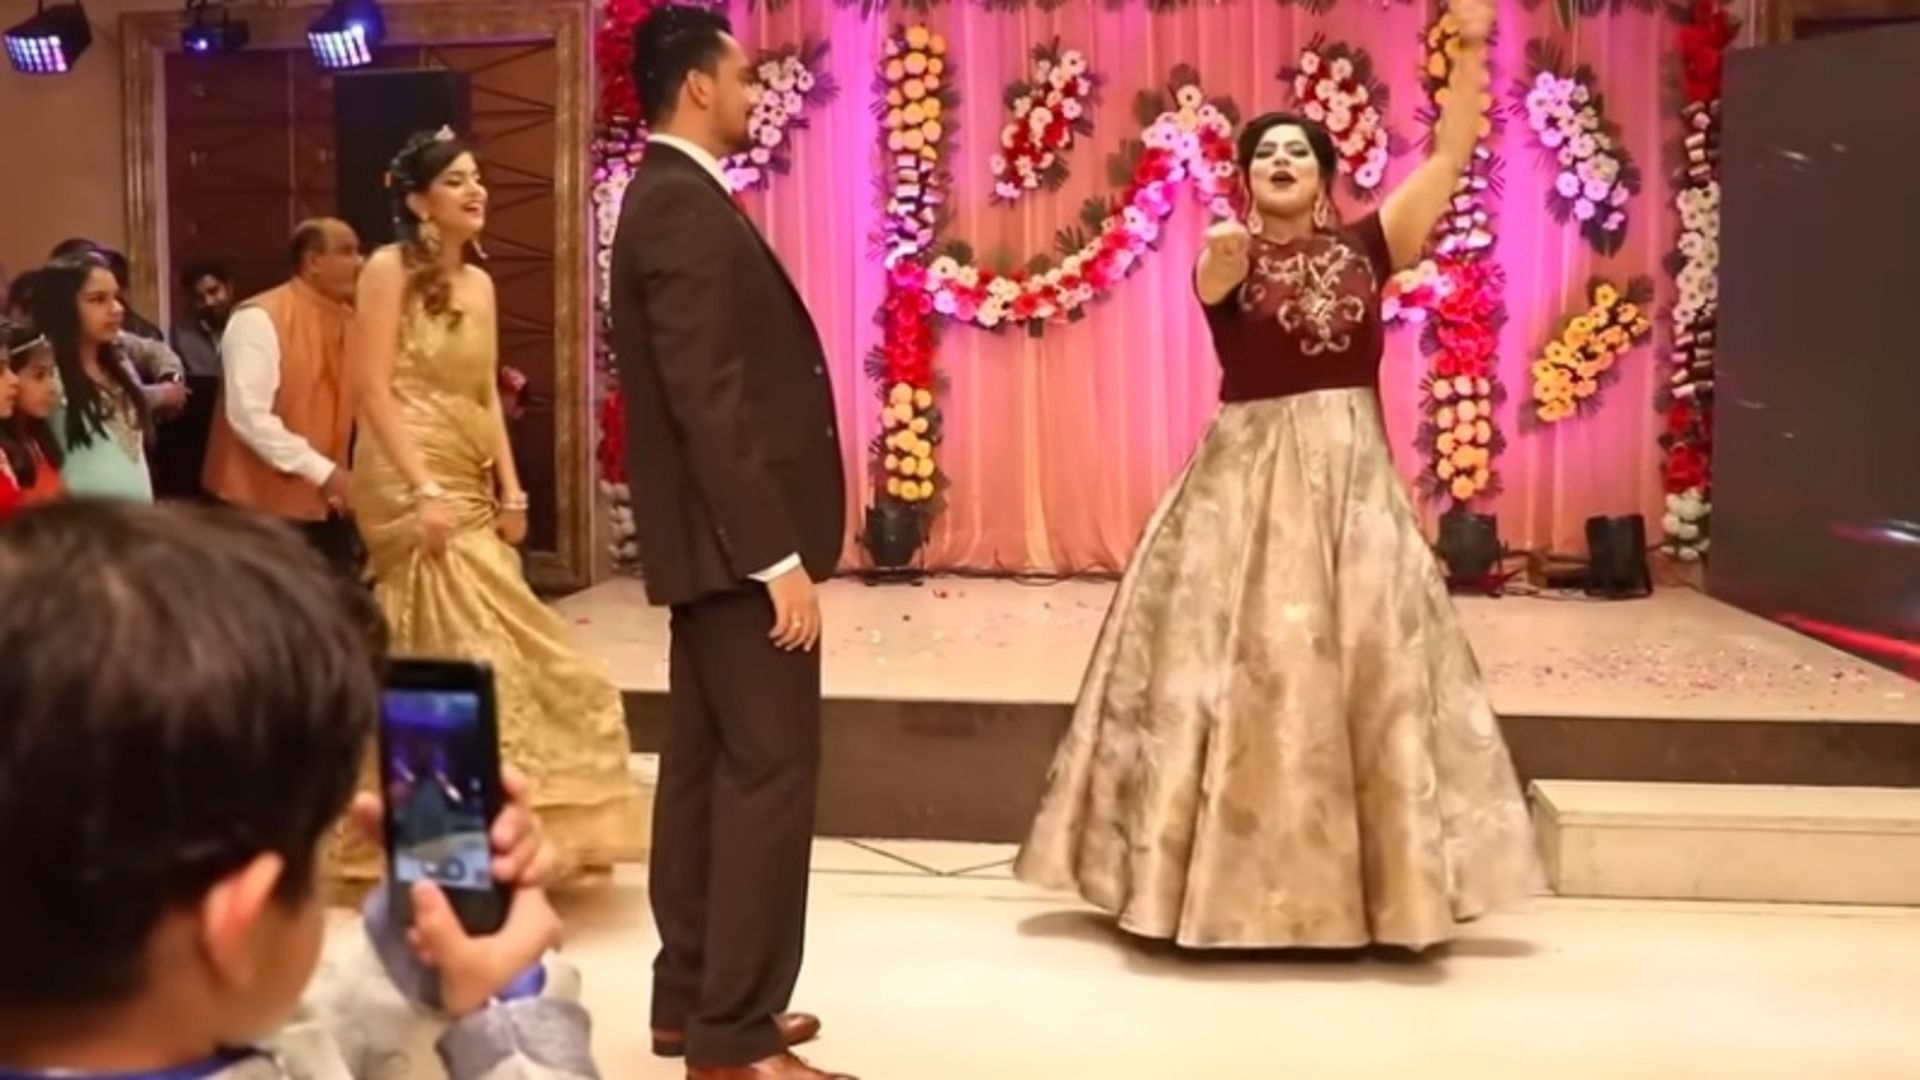 devar bhabhi dance video bhabi dance on bollywood song with devarani and devrani guests shocked